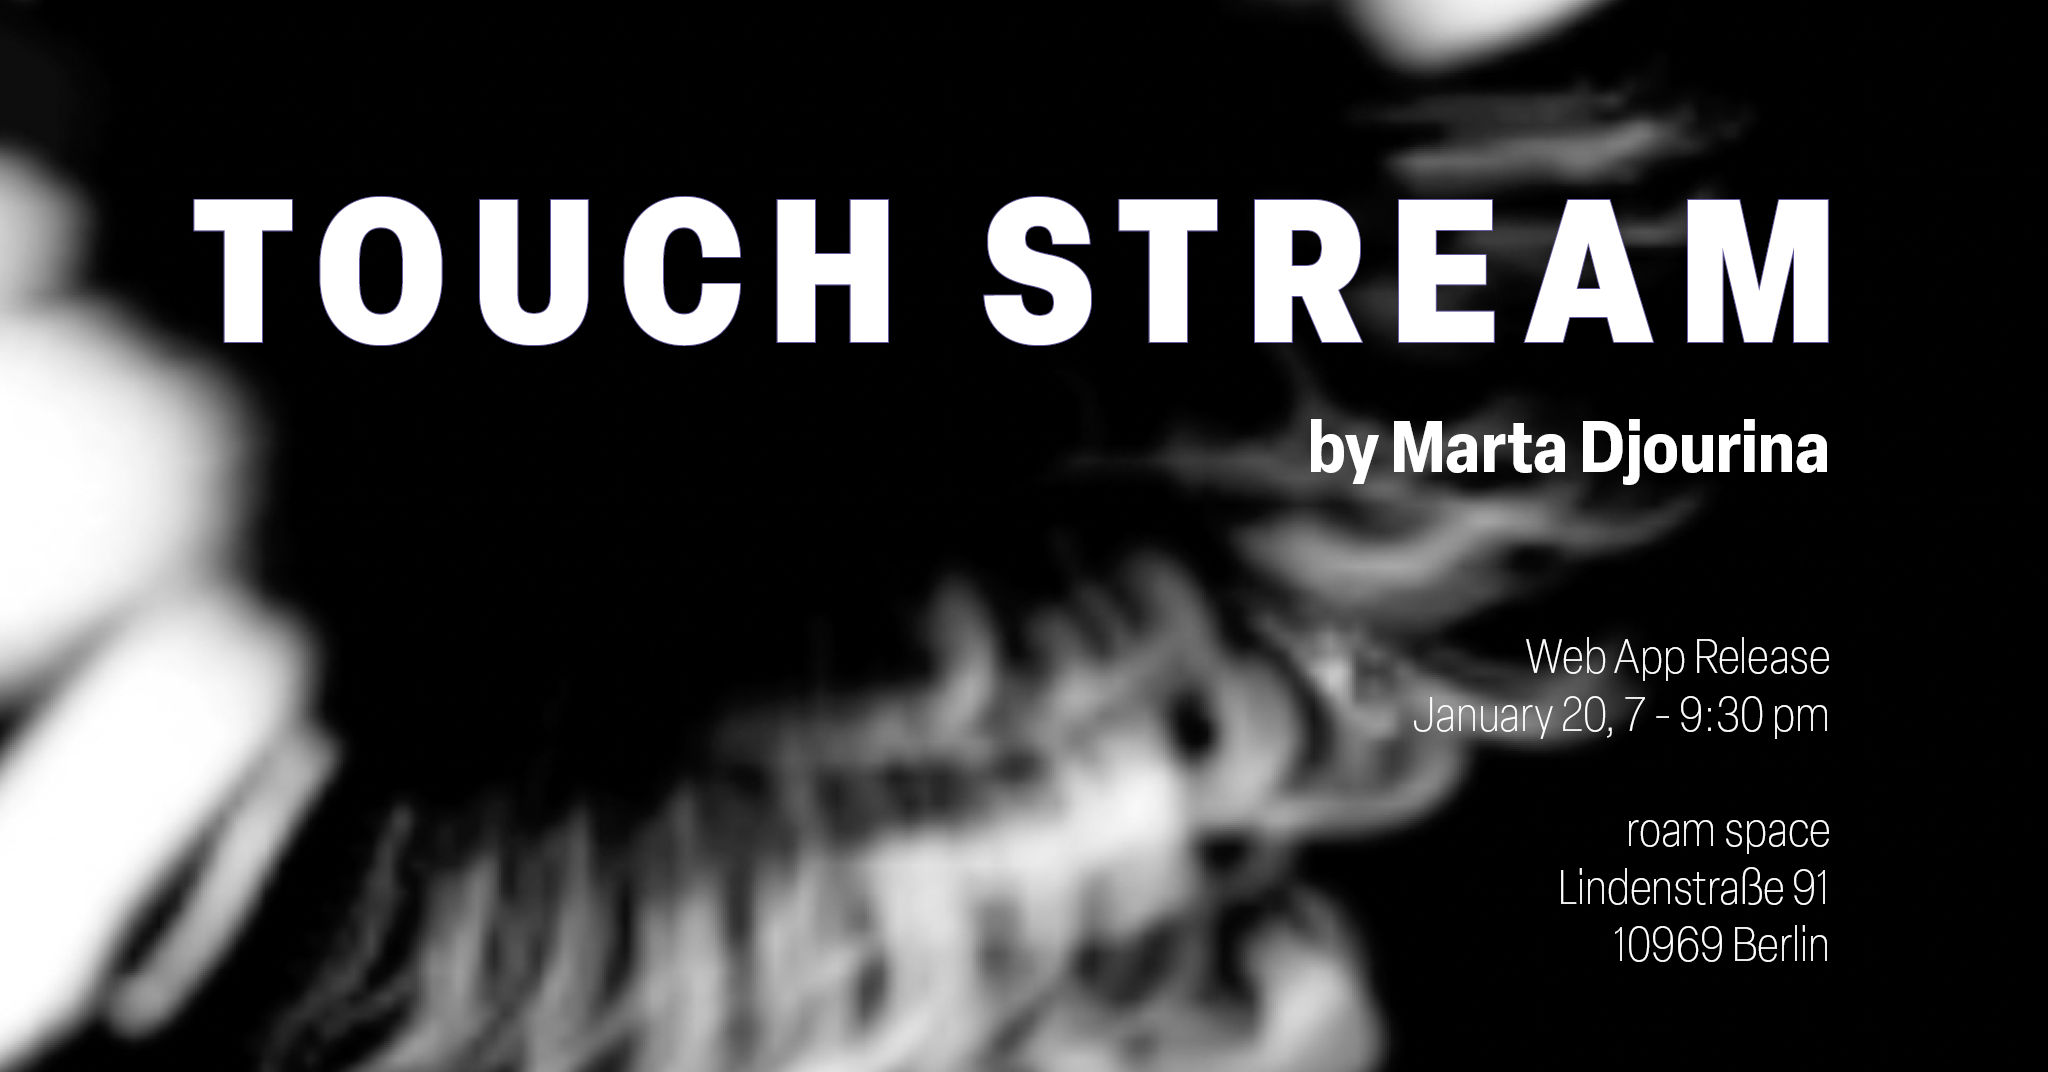 Touch Stream by Marta Djourina